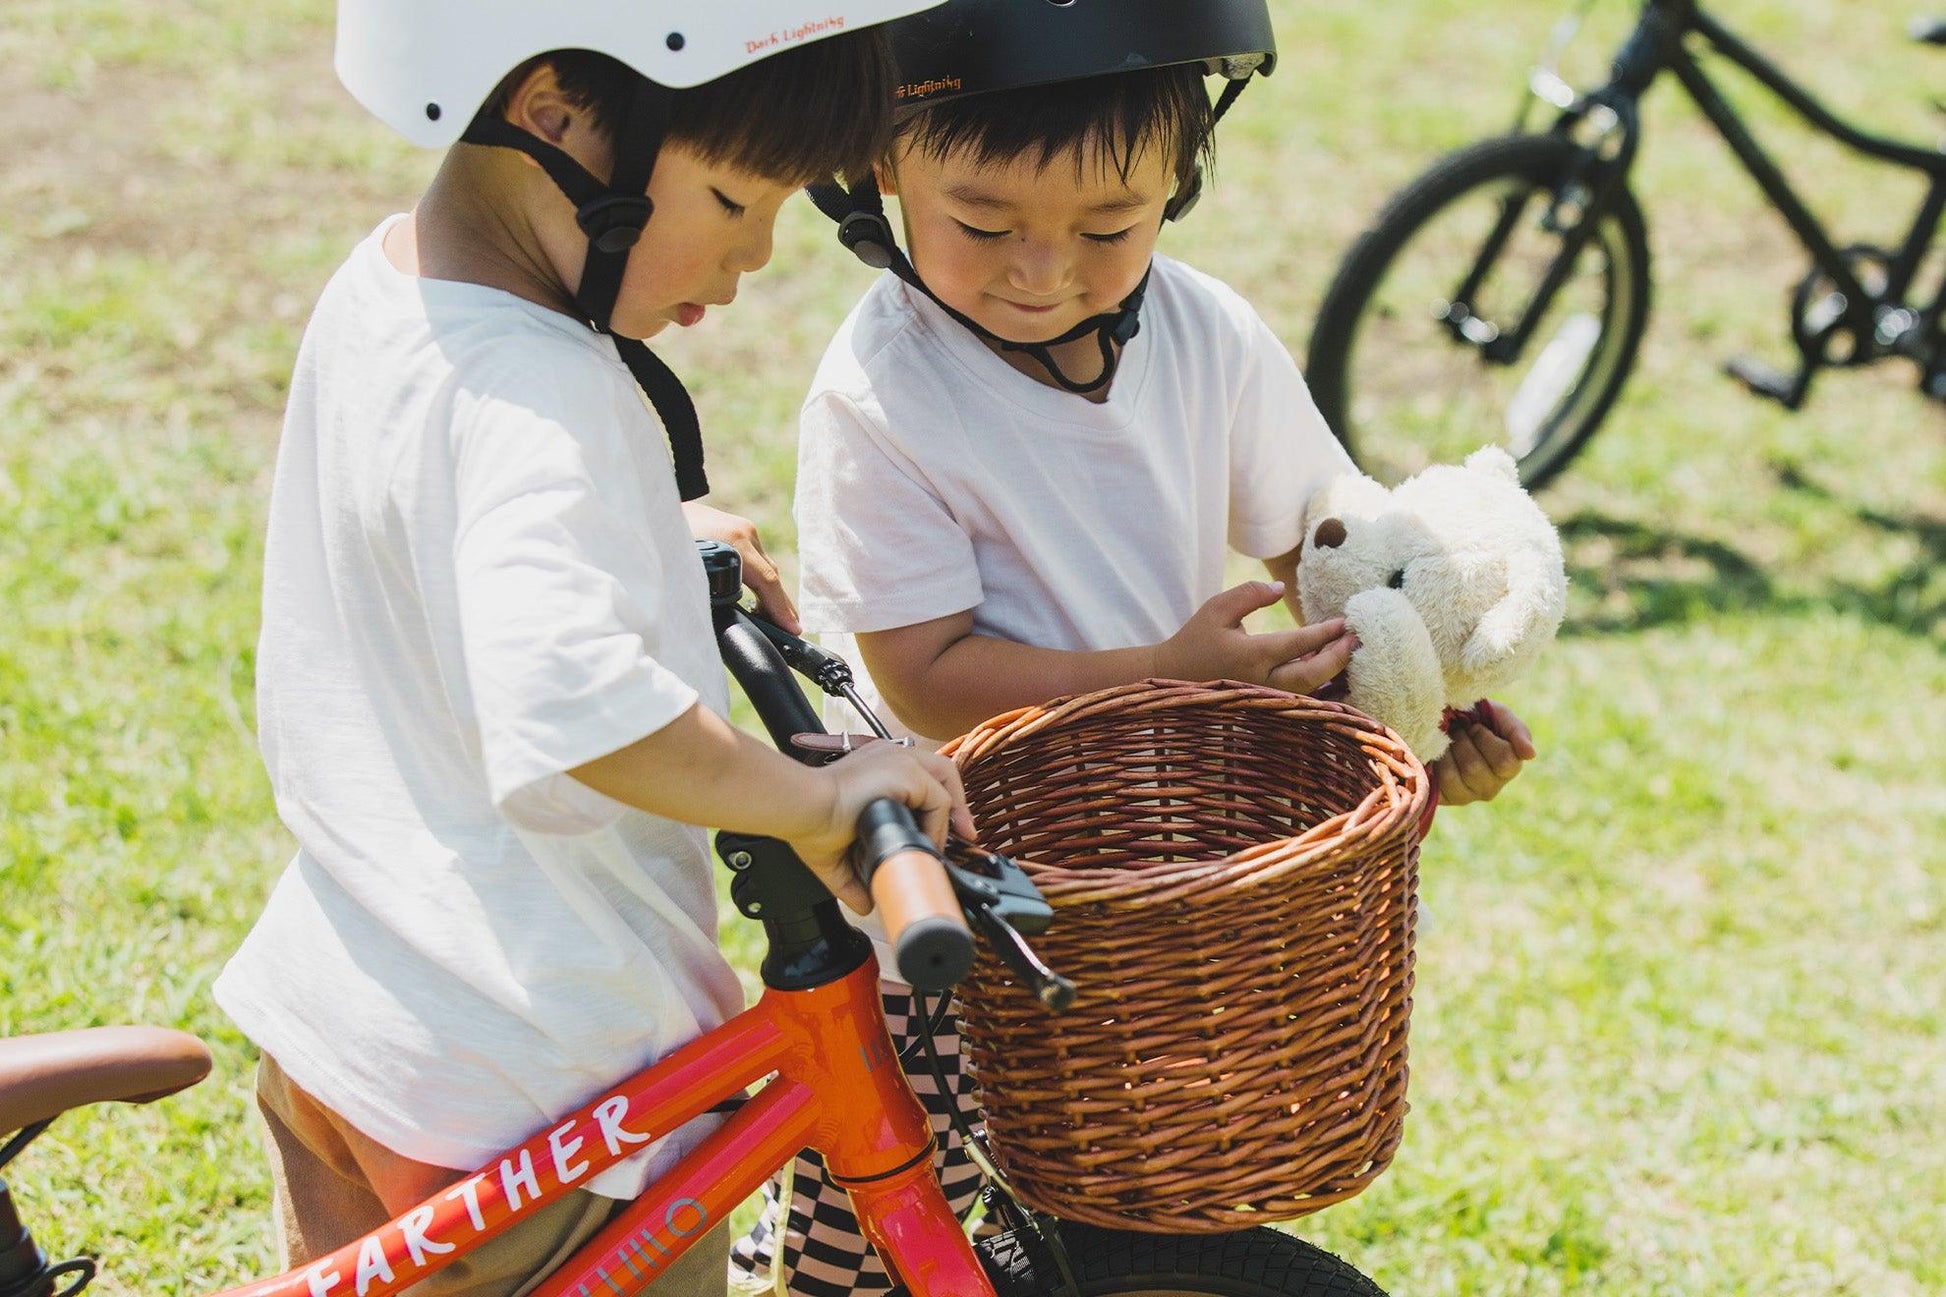 wimo kids 専用フロントバスケット - wimo online store - オシャレ電動自転車 - 最軽量級子供自転車